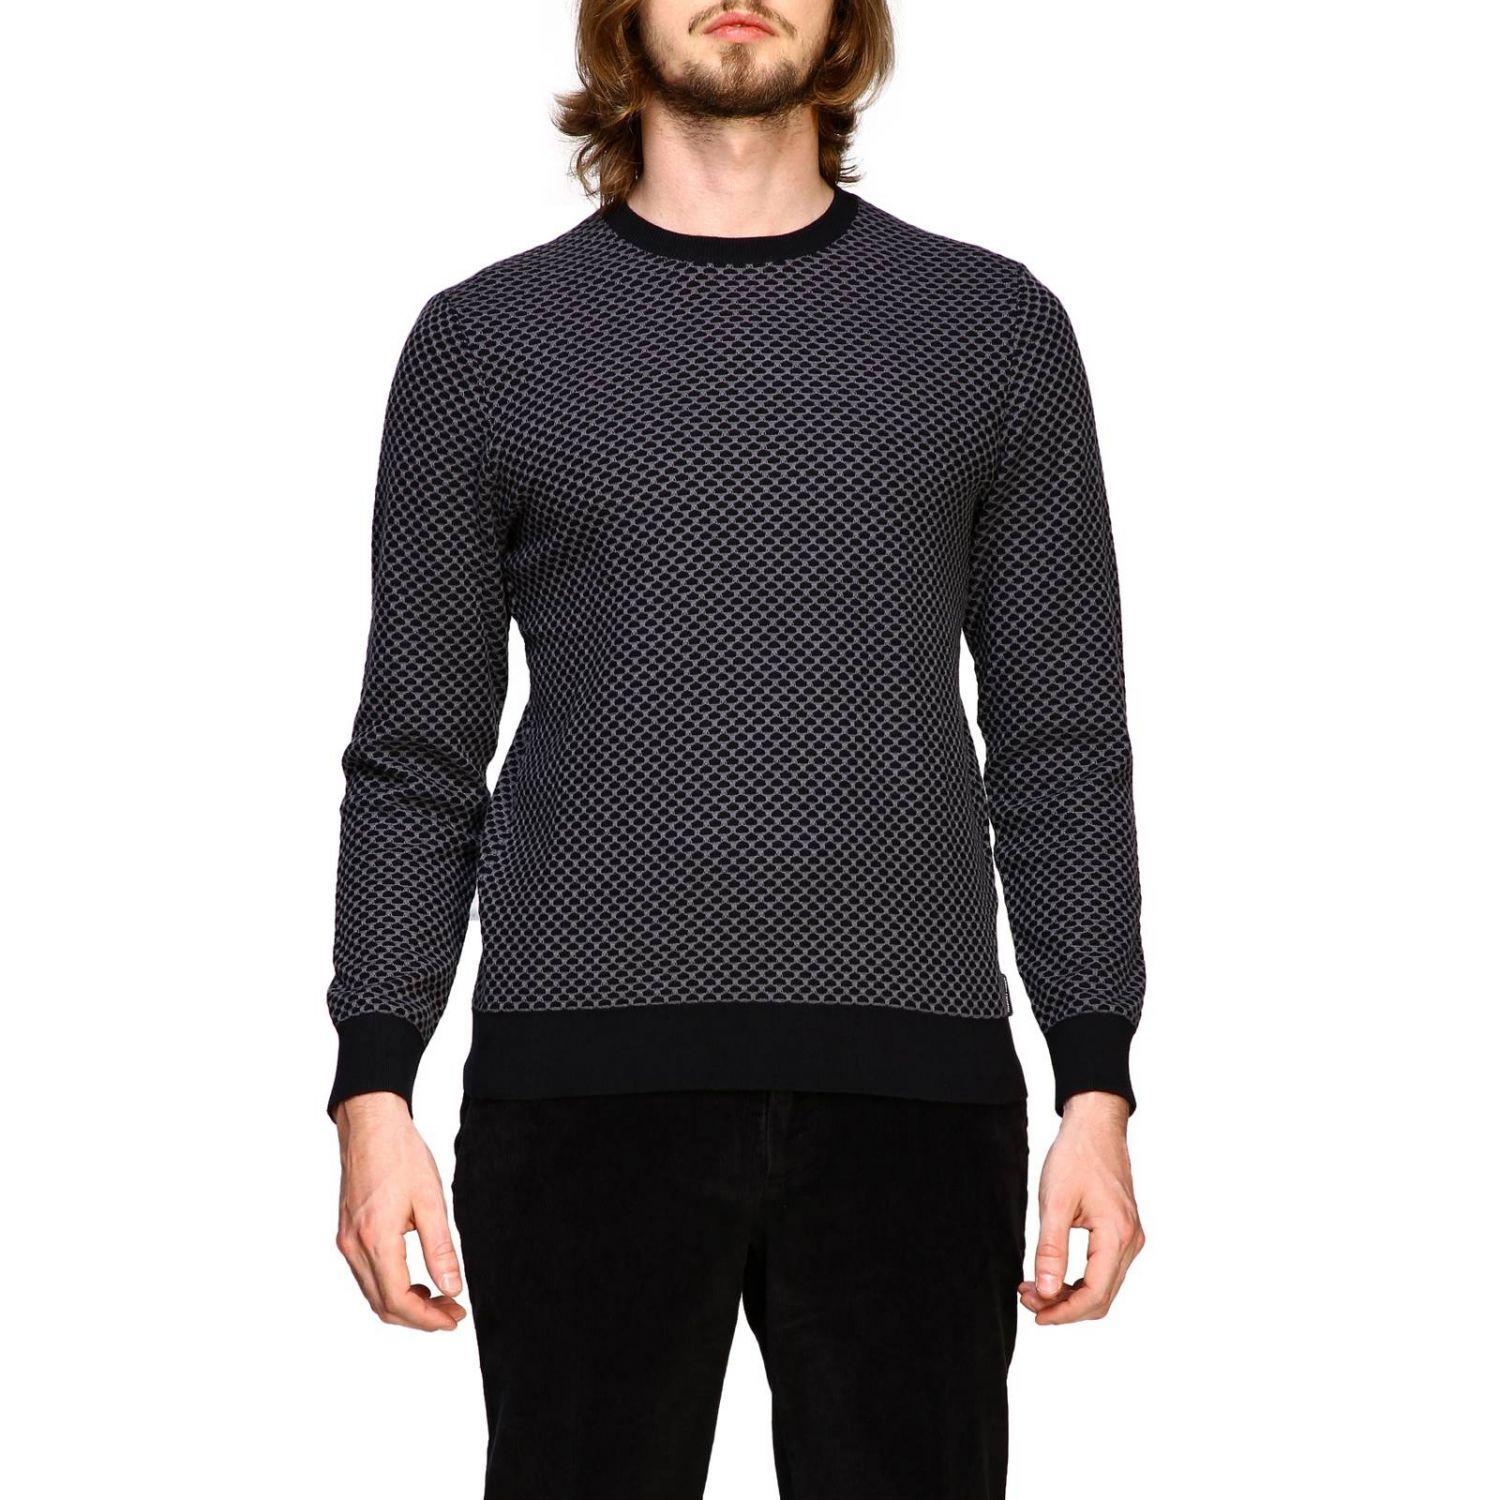 Armani Exchange Cotton Men's Sweater in Black for Men - Lyst